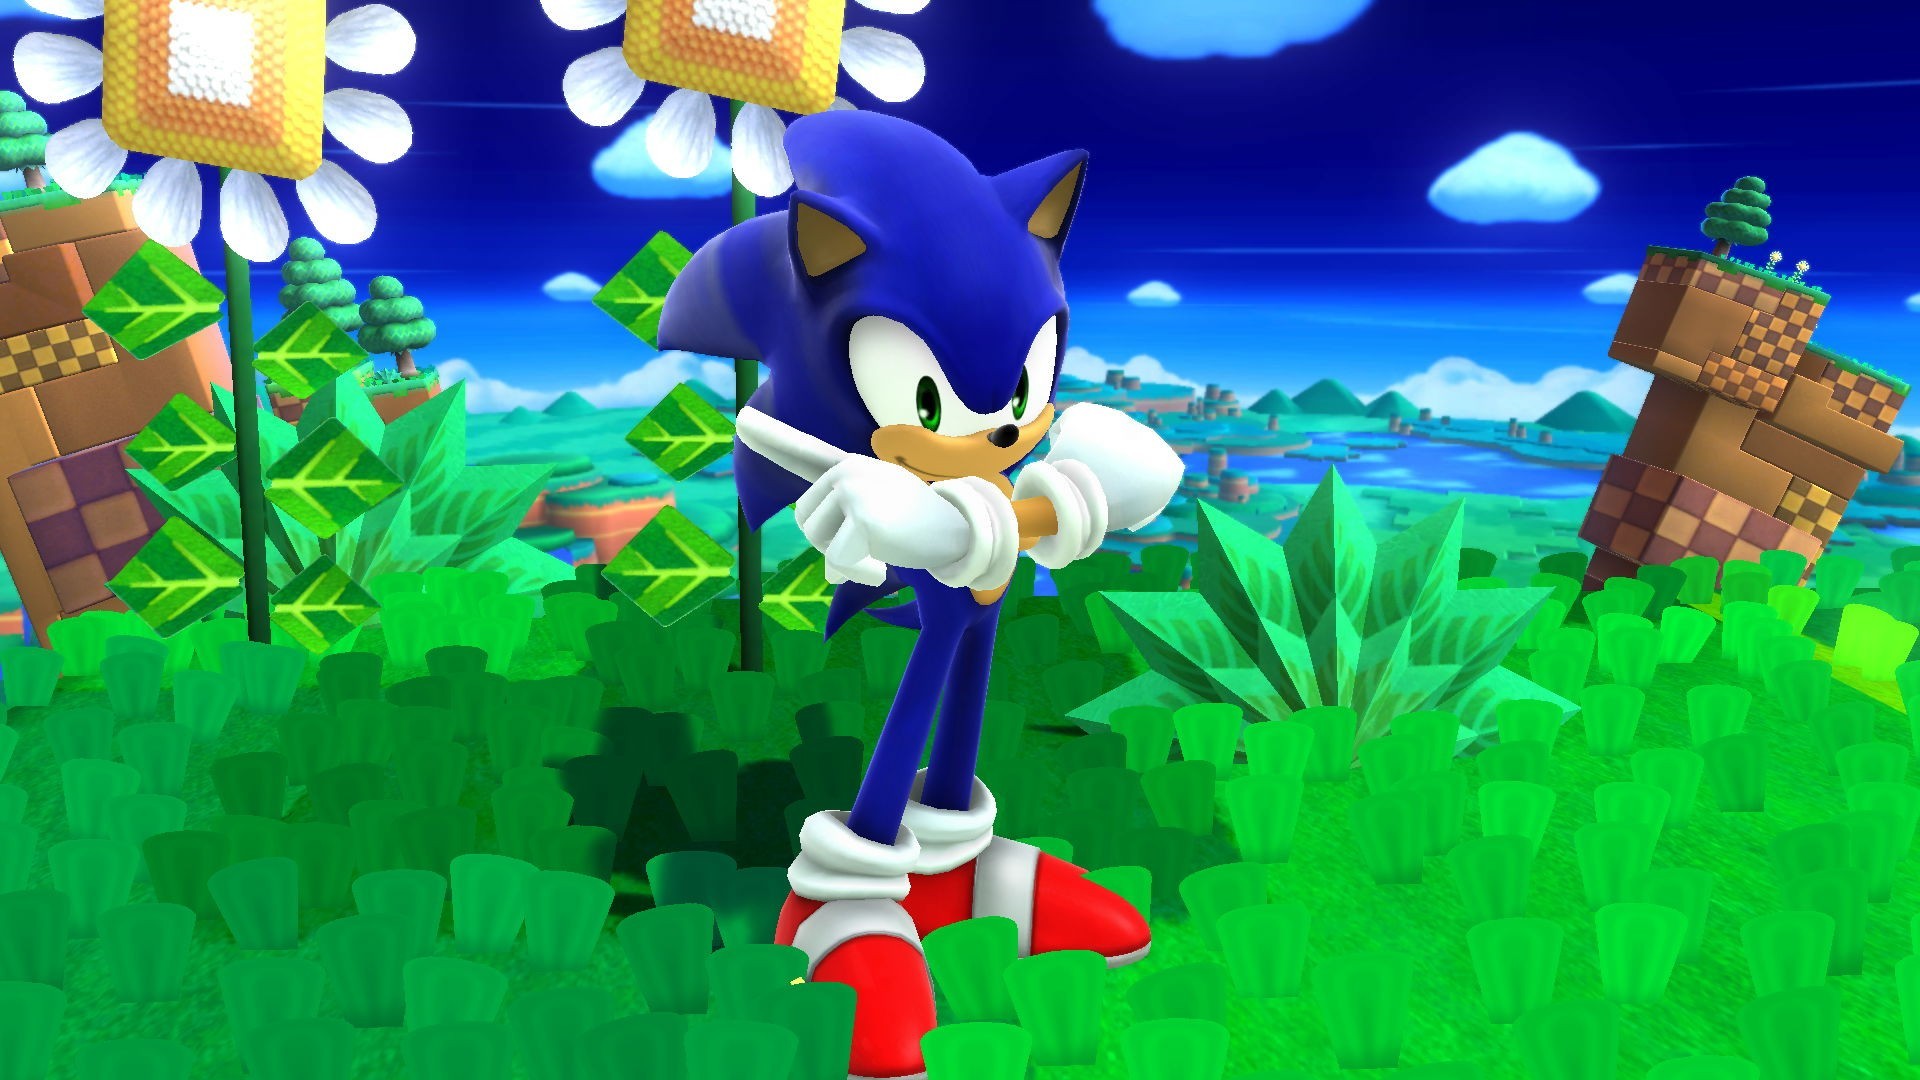 1920x1080 Sonic Adventure 2 Battle Re-Skin v0.1 (Super Smash Bros. for